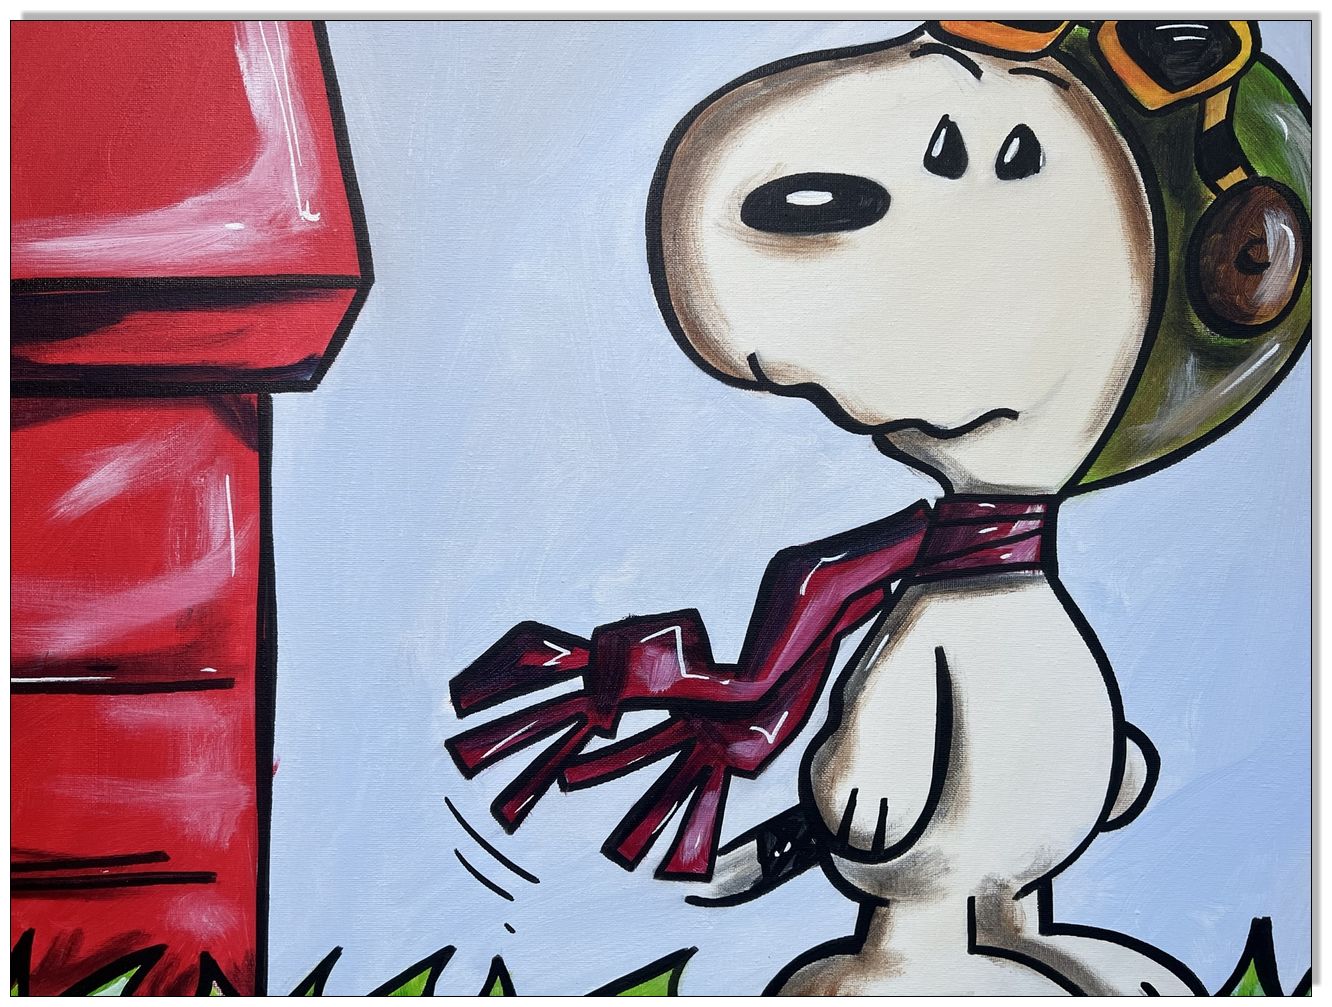 PEANUTS Snoopy vs Red Baron IV - 40 x 50 cm 2